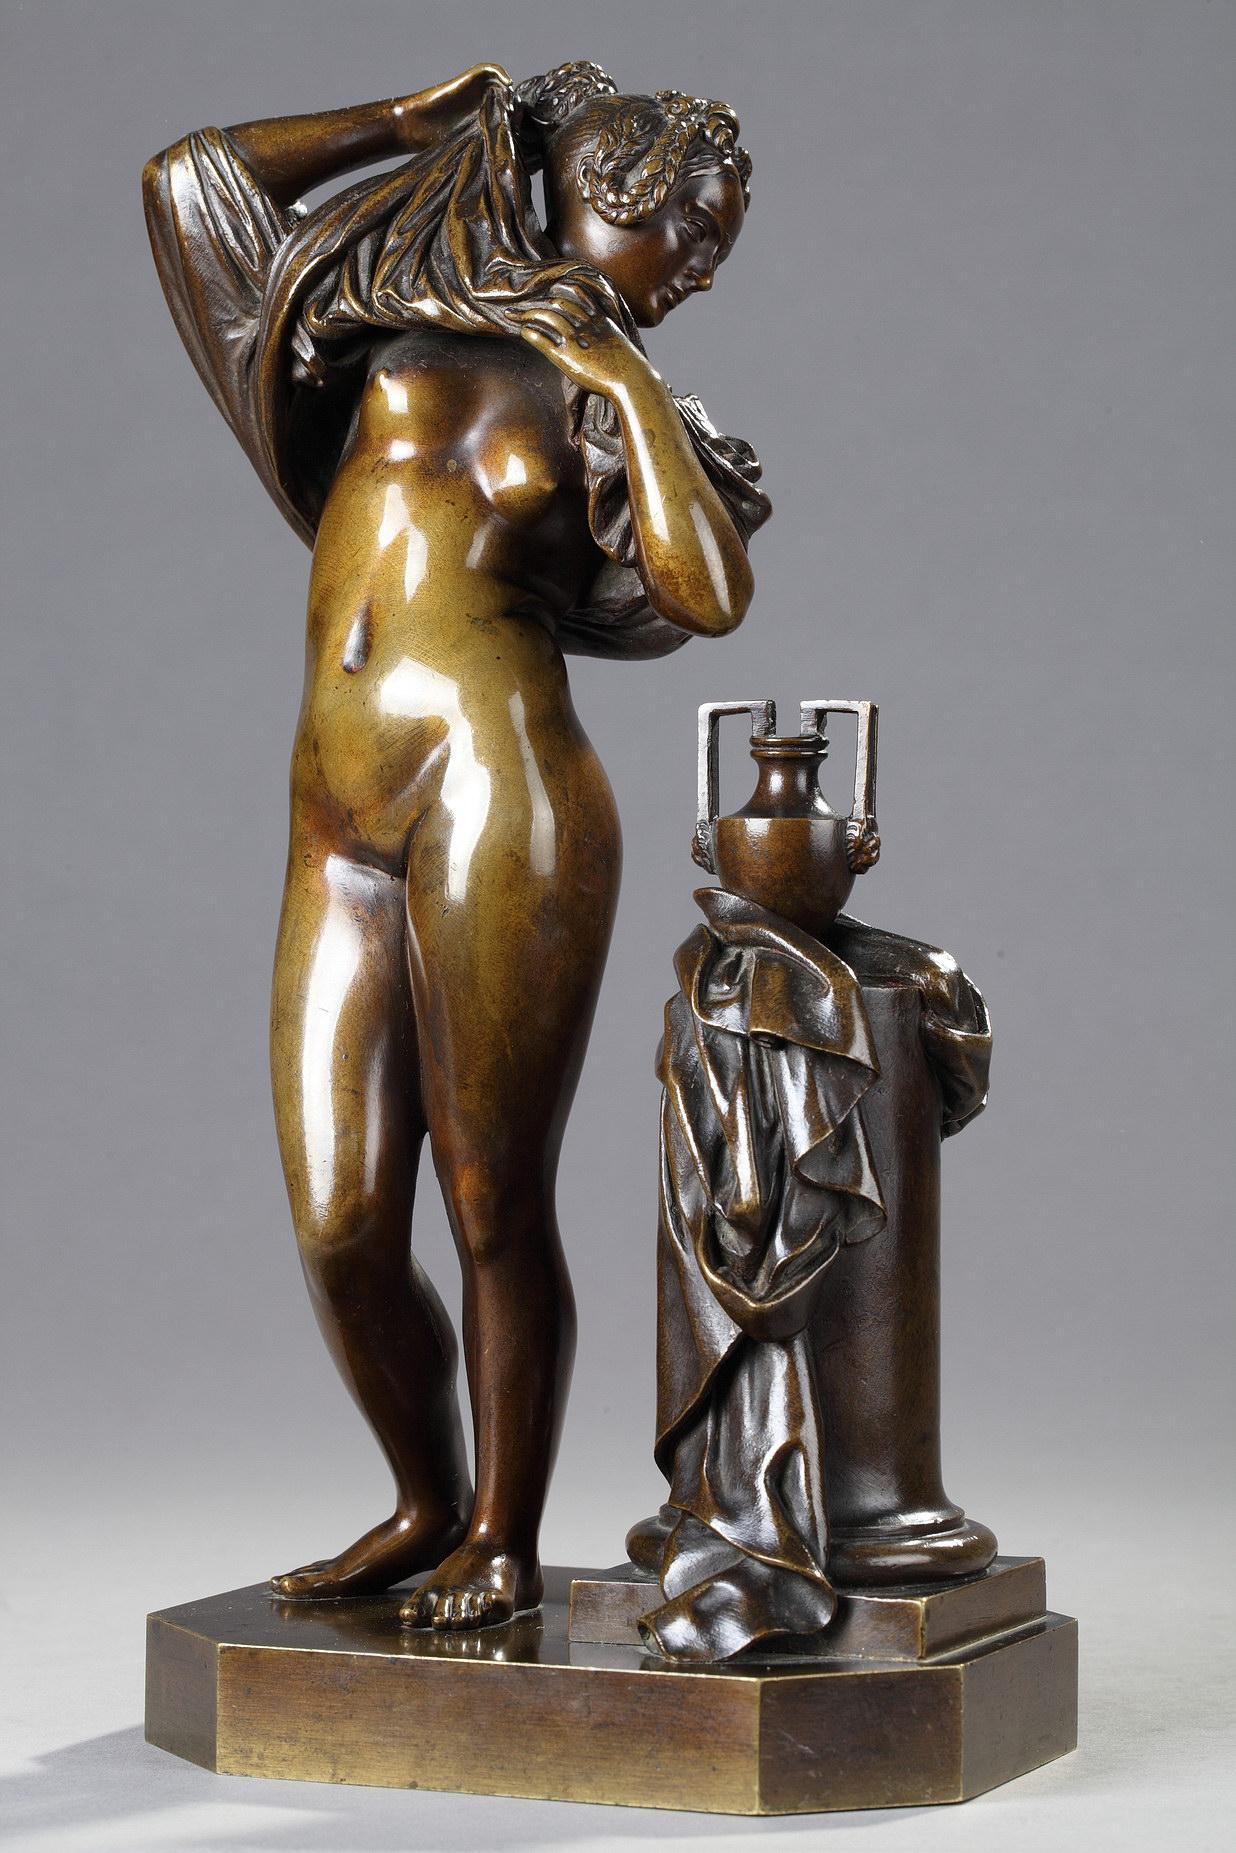 James Pradier Figurative Sculpture - Woman taking off her shirt